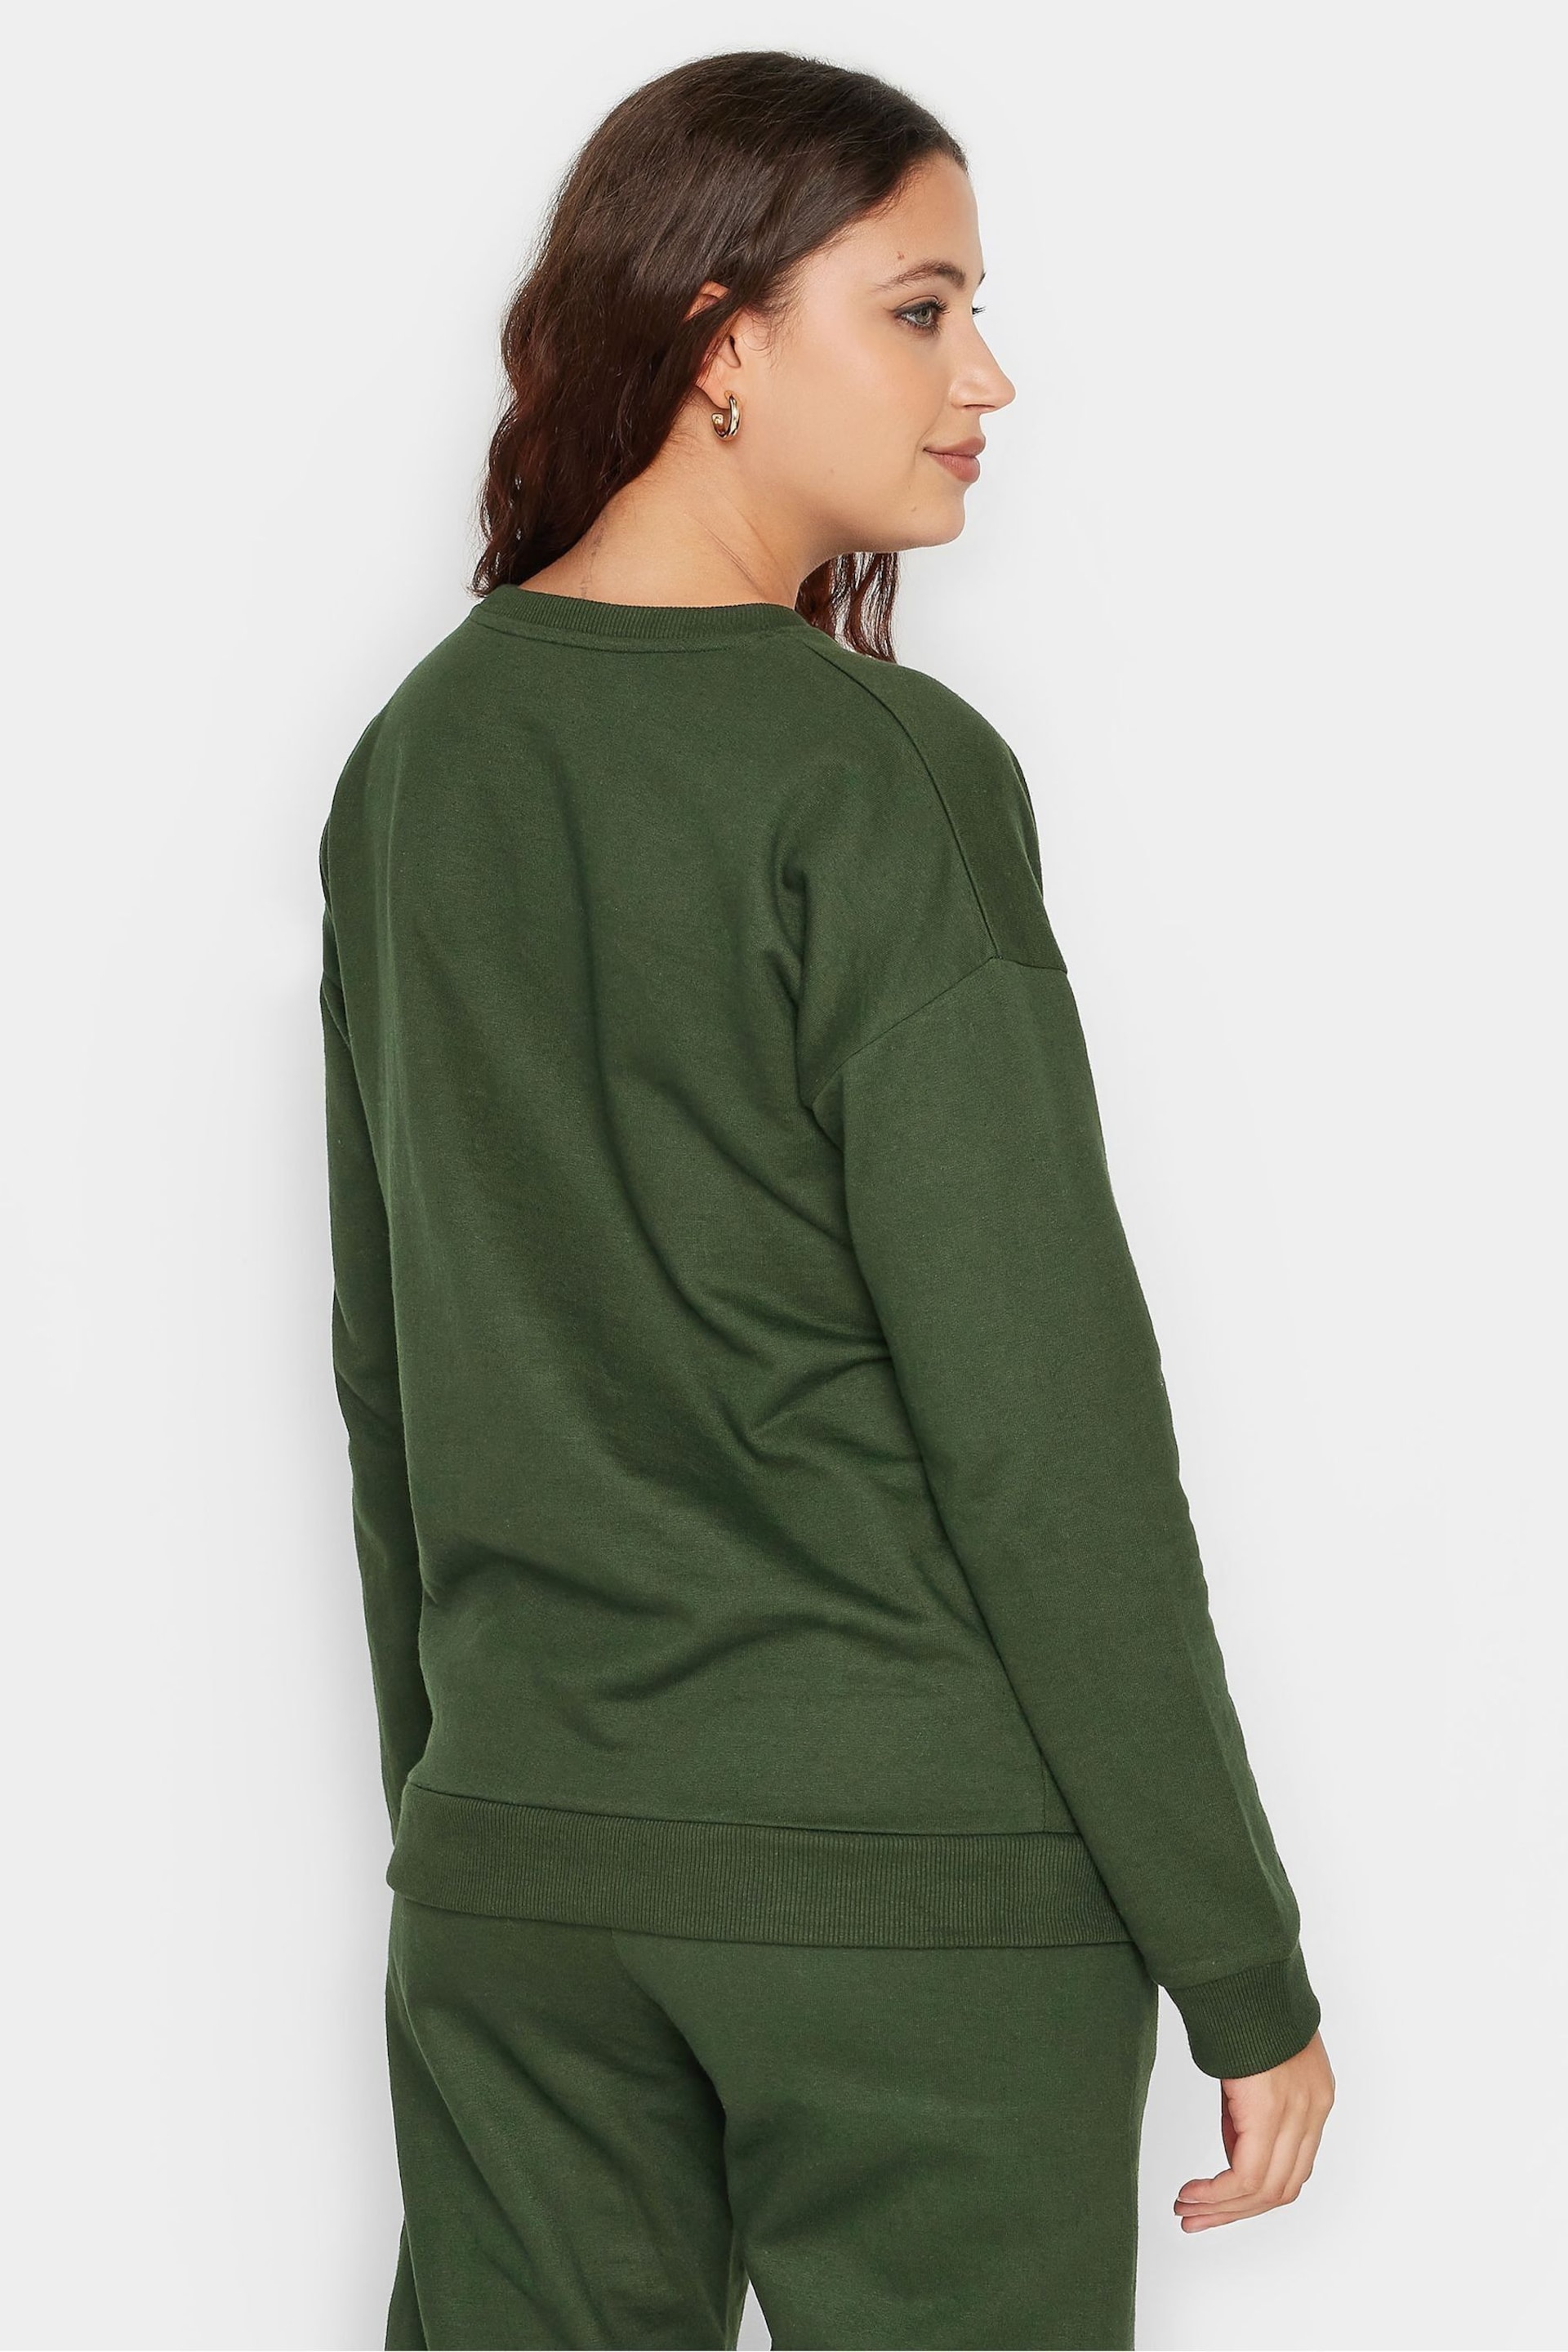 Long Tall Sally Green Sweatshirt - Image 2 of 4